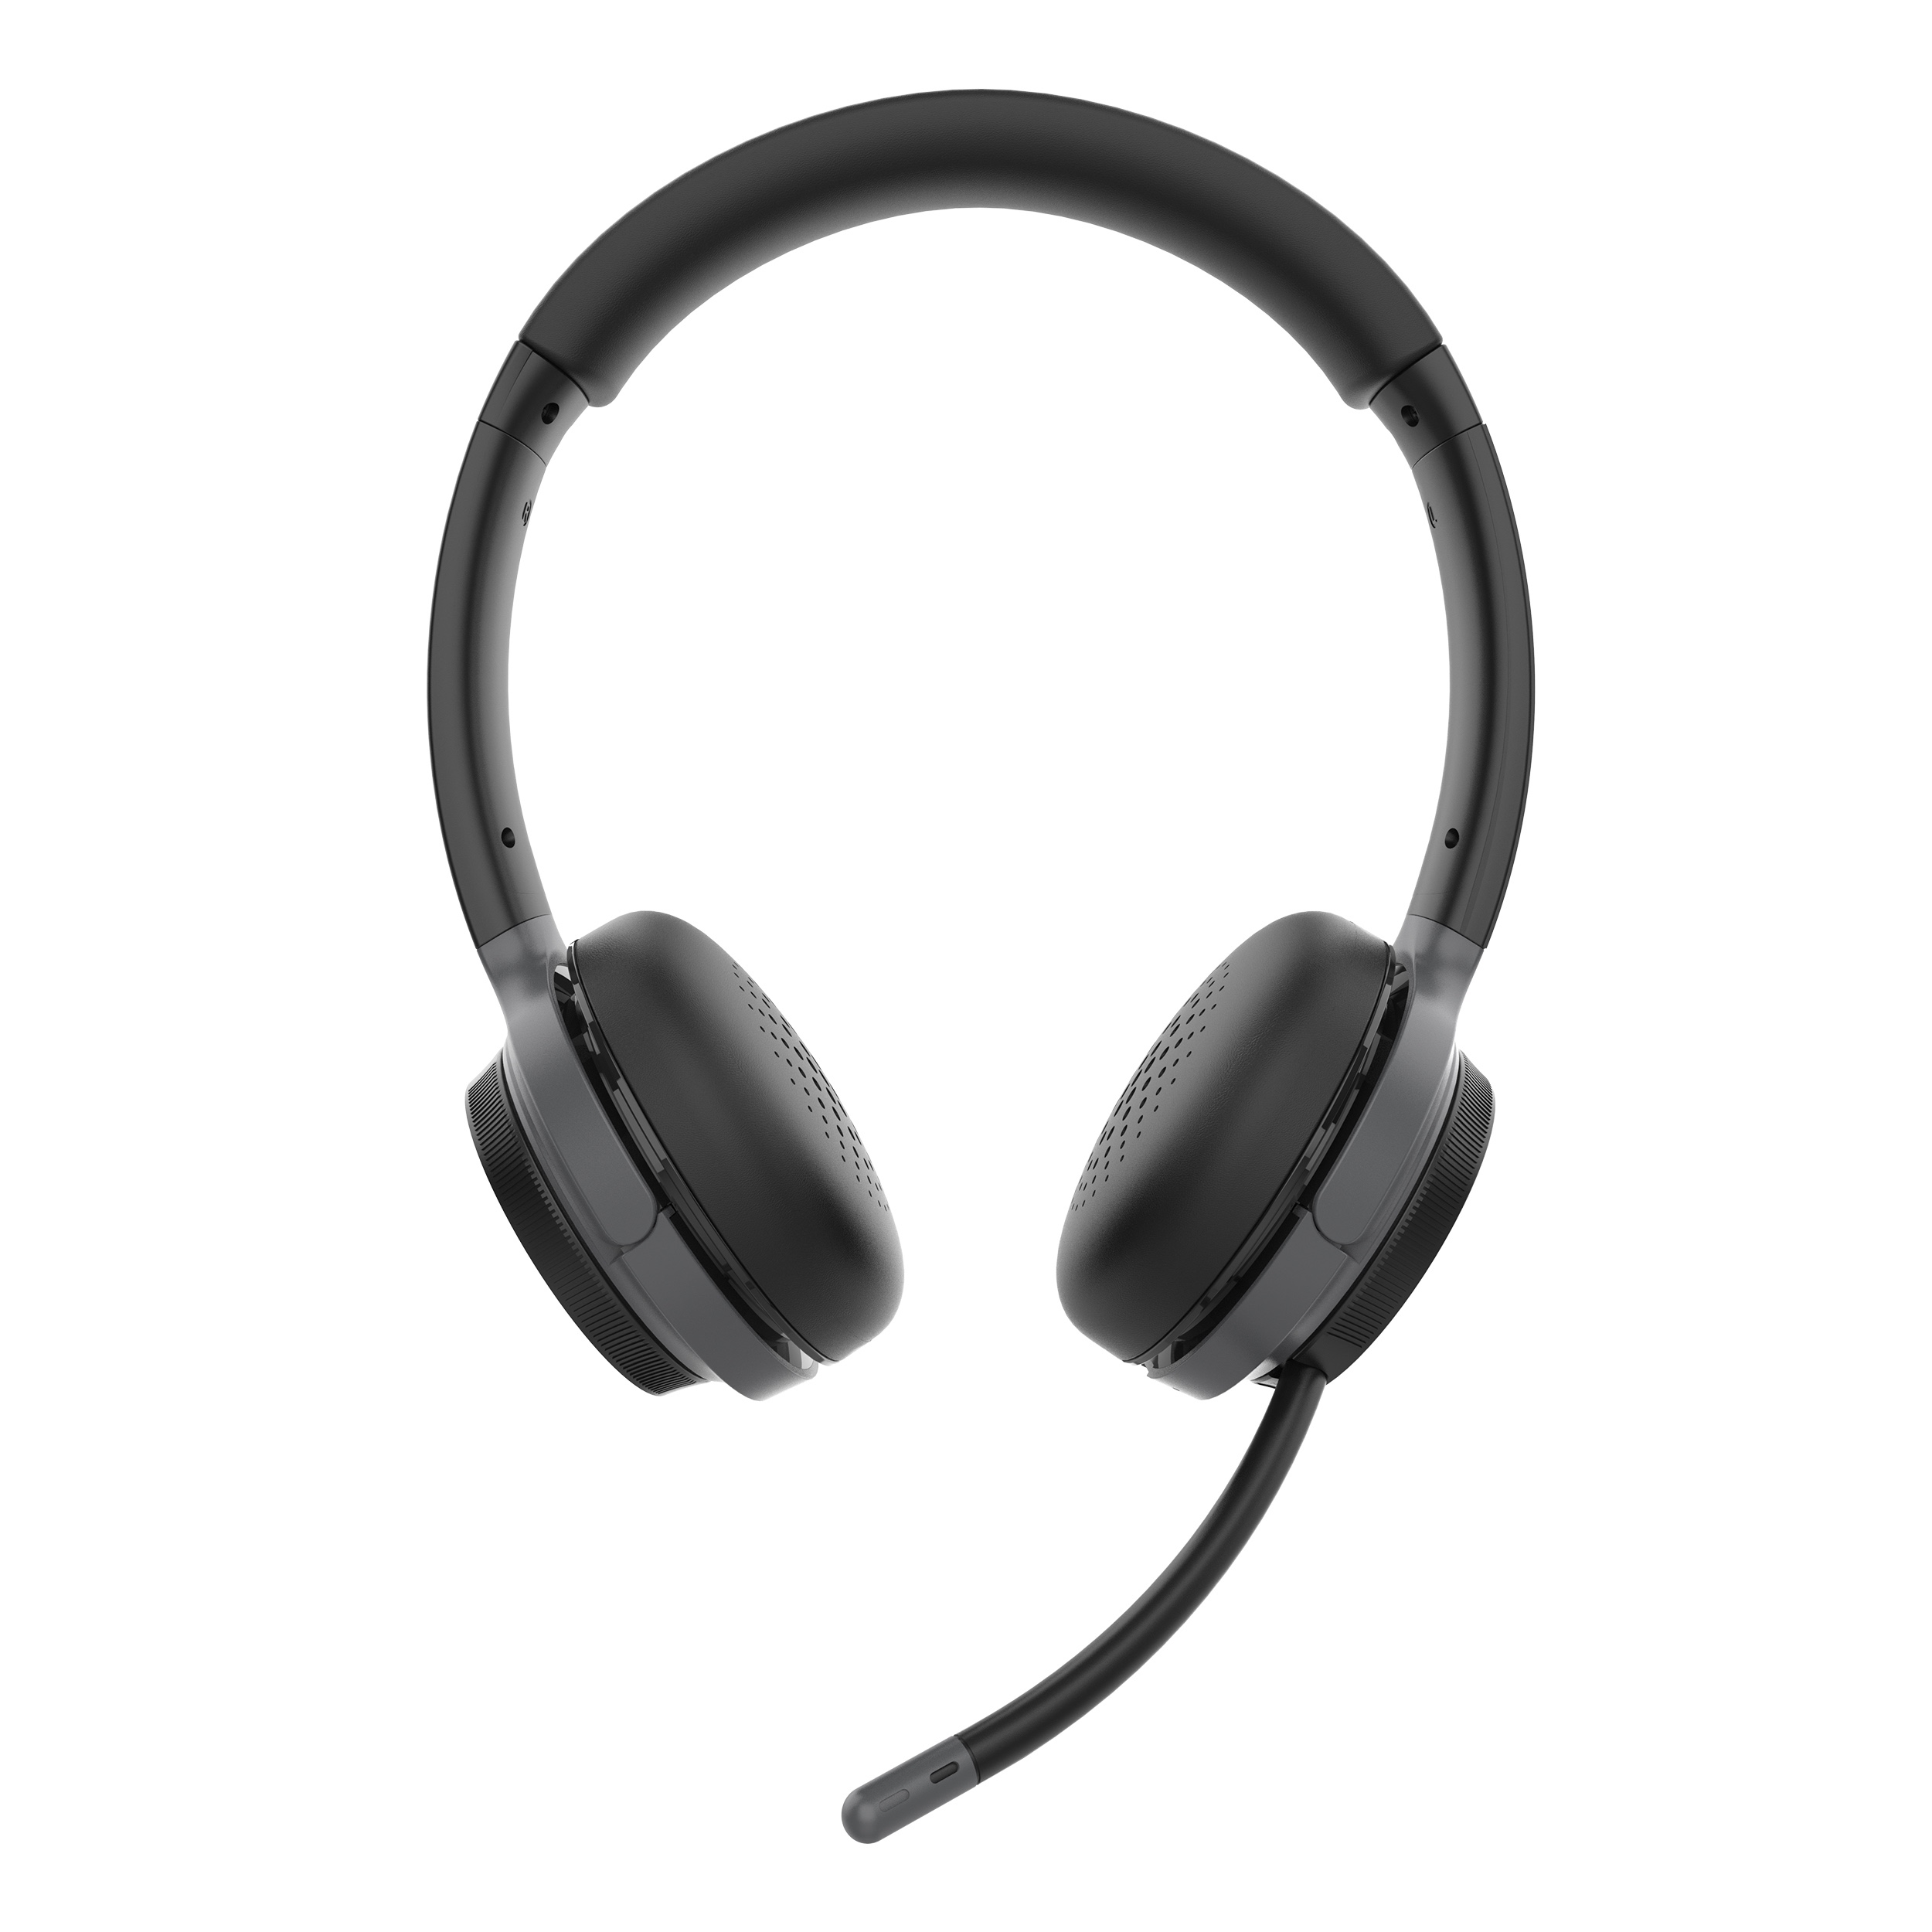 Morpheus 360 Comfort Plus Wireless Over-Ear Headphones - Bluetooth Hea –  www.